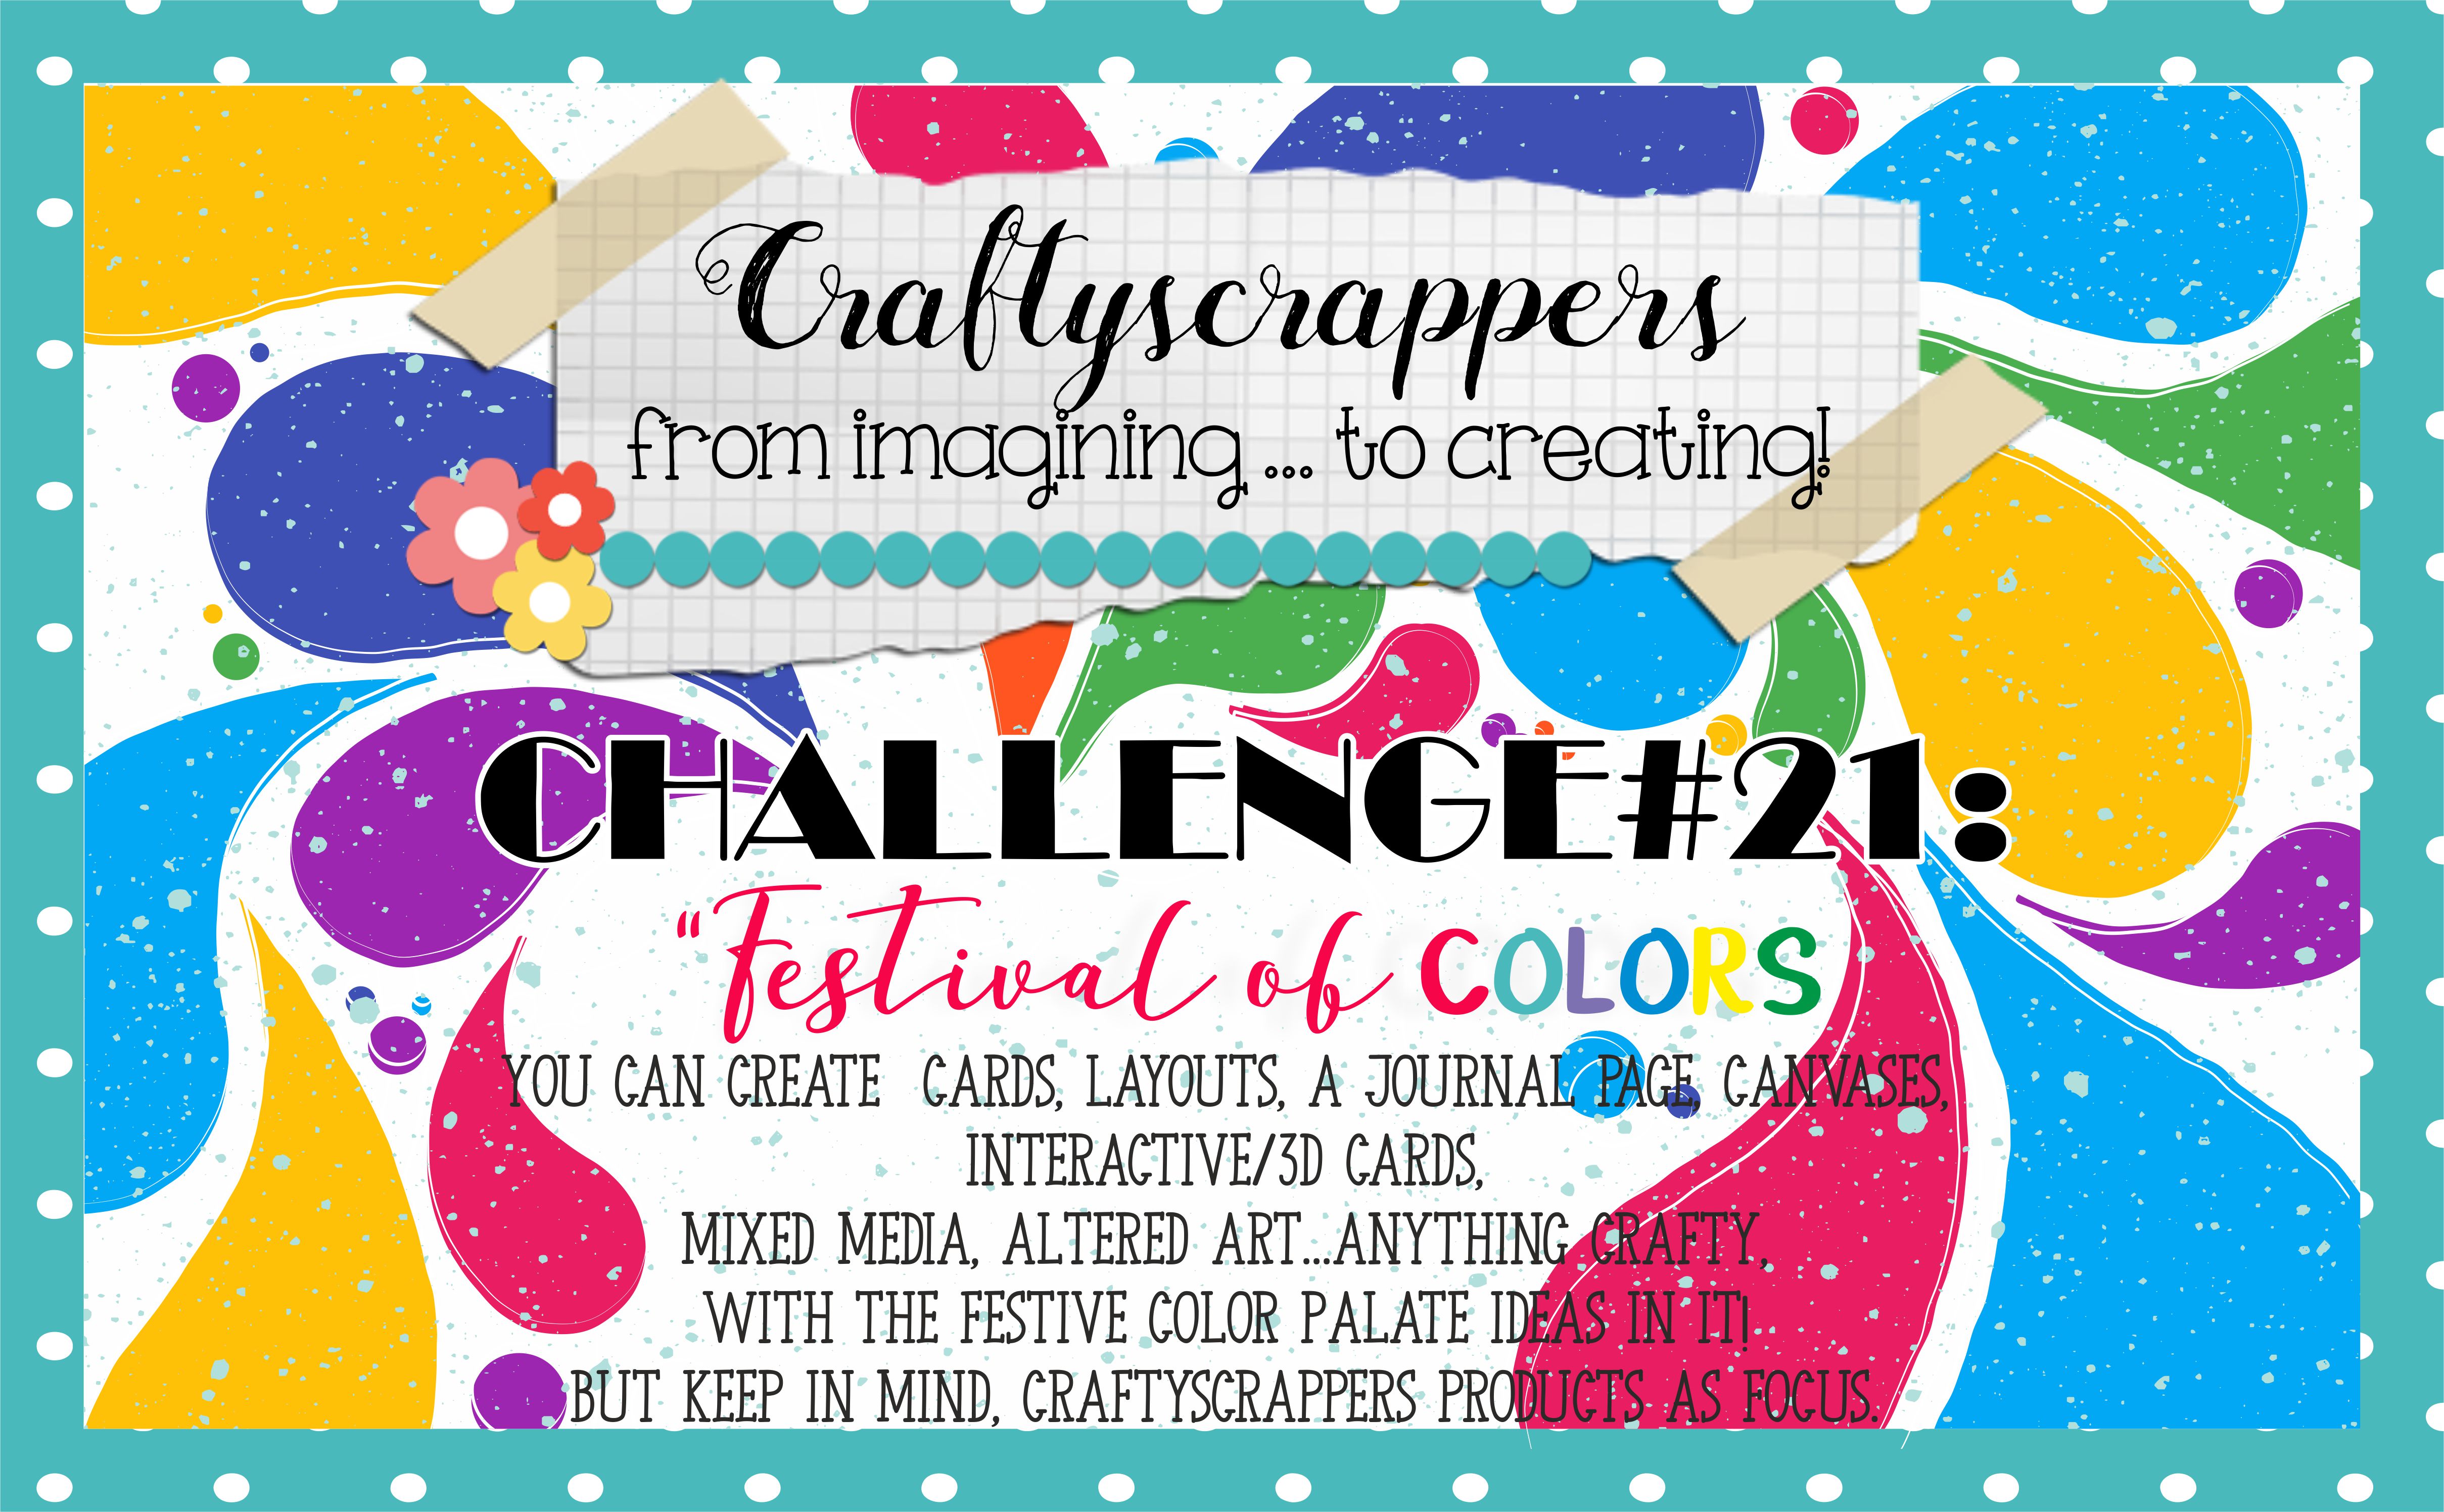 challenge21 festival of colors.jpg